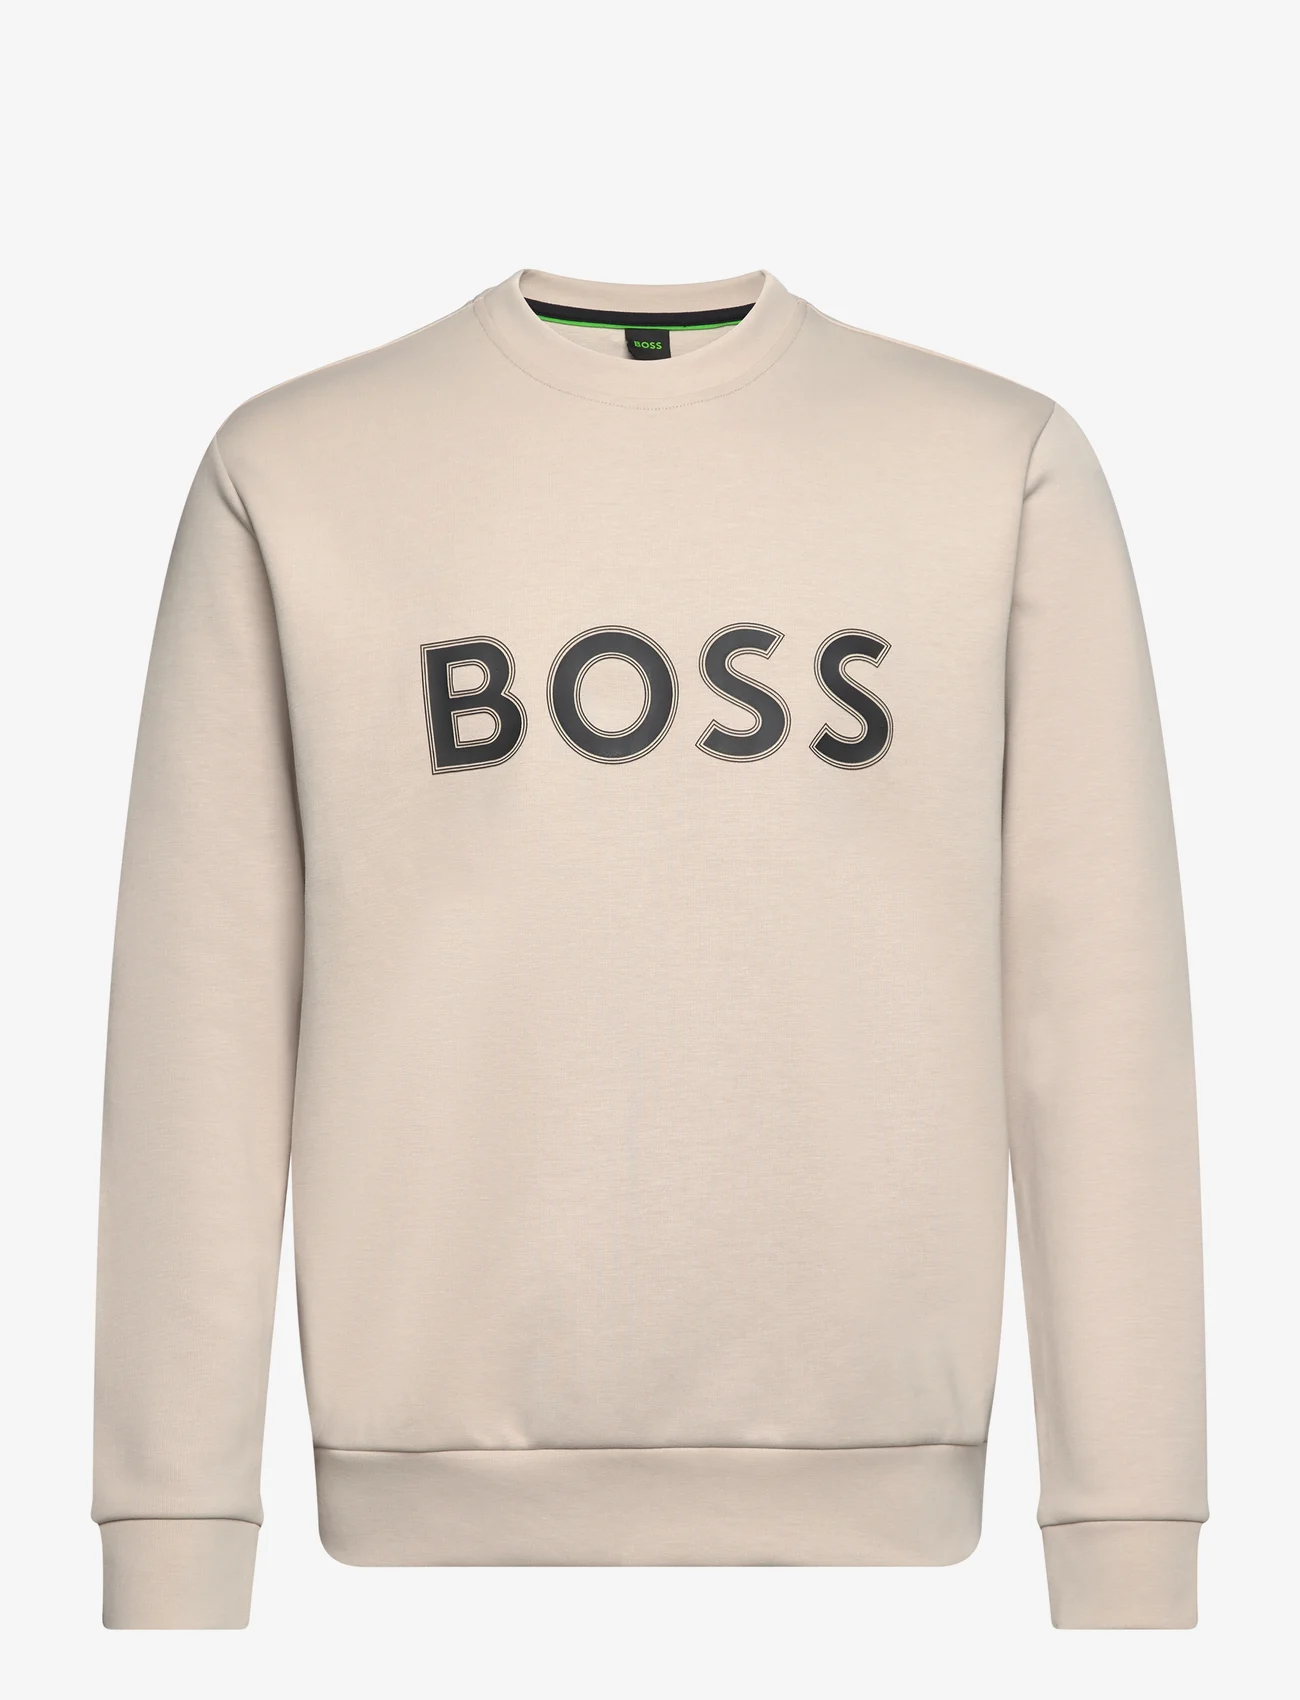 BOSS - Salbo 1 - sweatshirts - light beige - 0